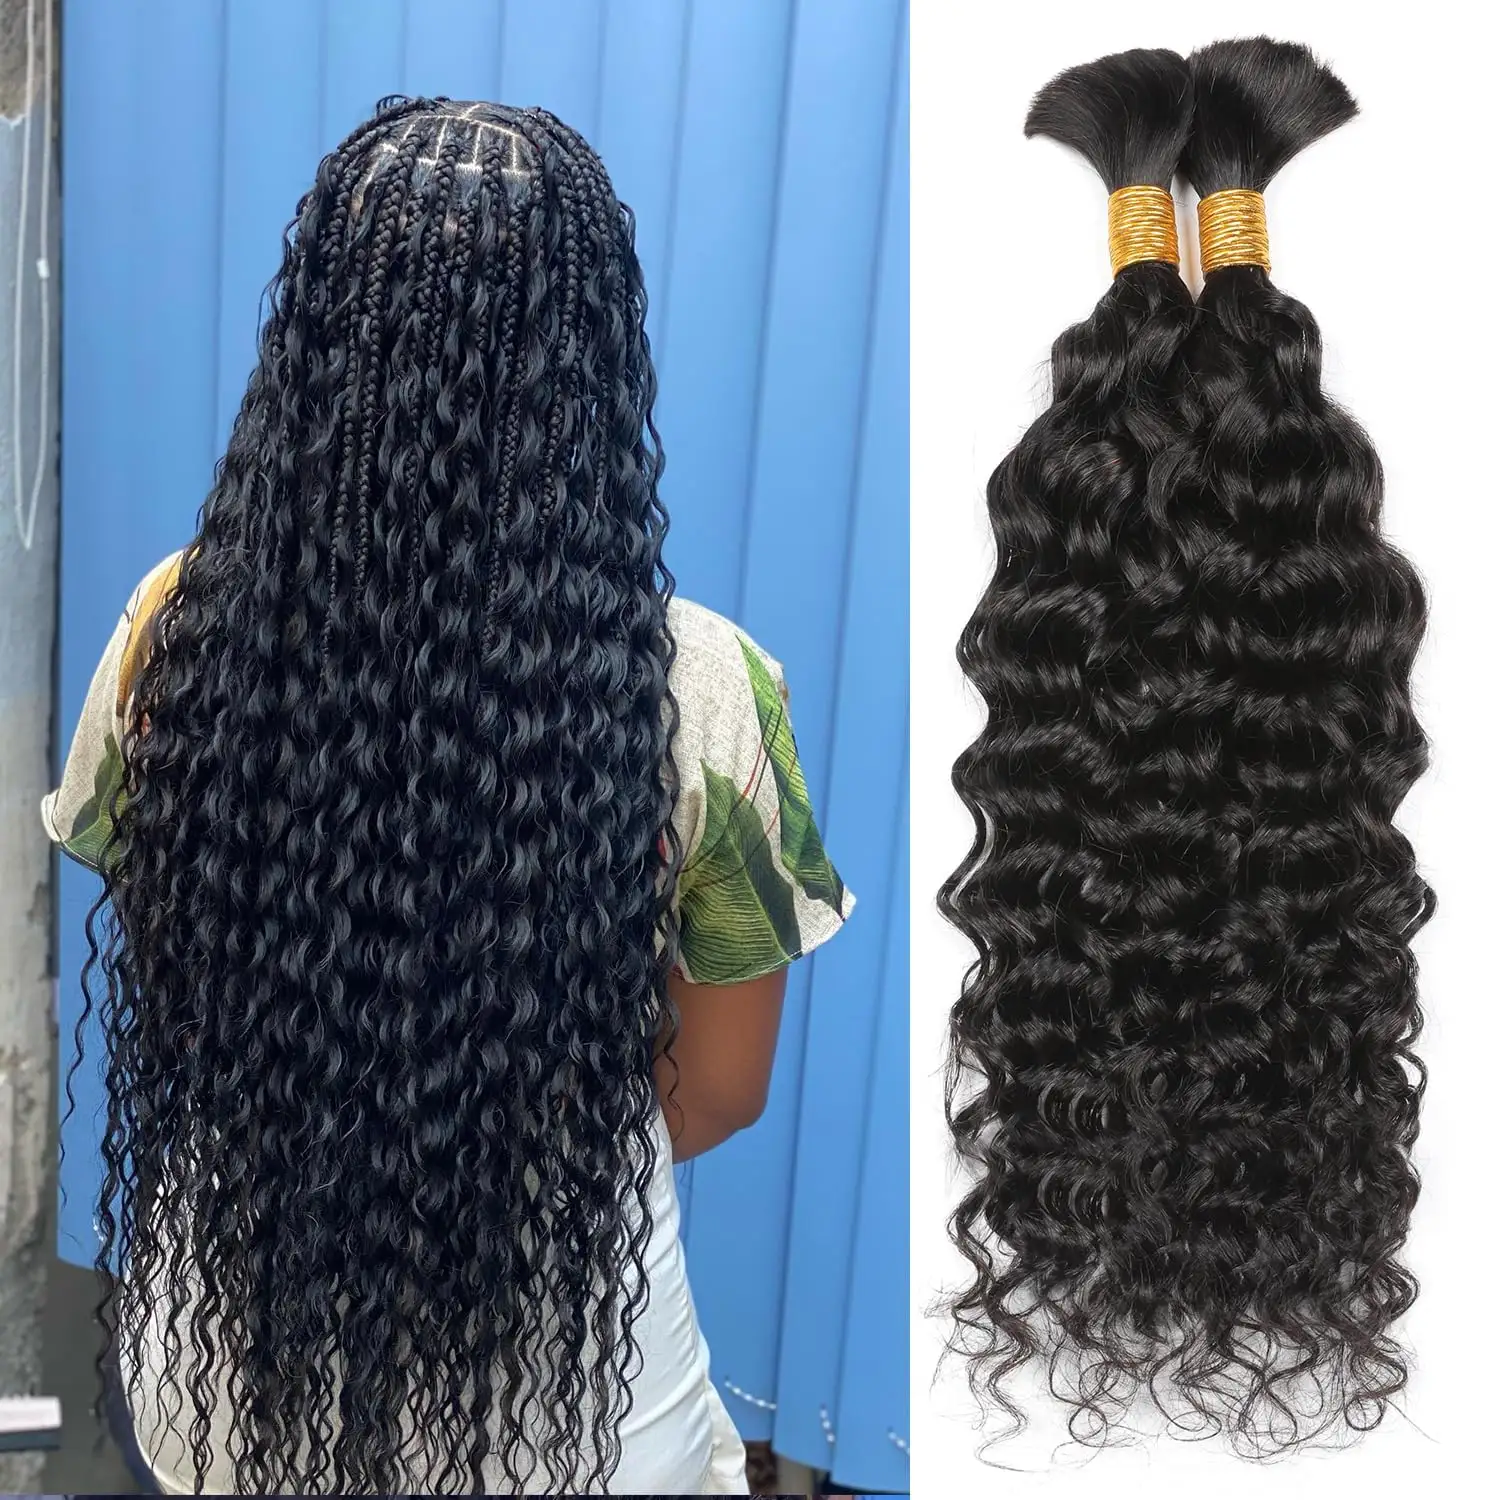 Rambut kepang gelombang air alami massal 100% rambut manusia gelombang dalam rambut keriting keriting jumlah besar untuk mengepang